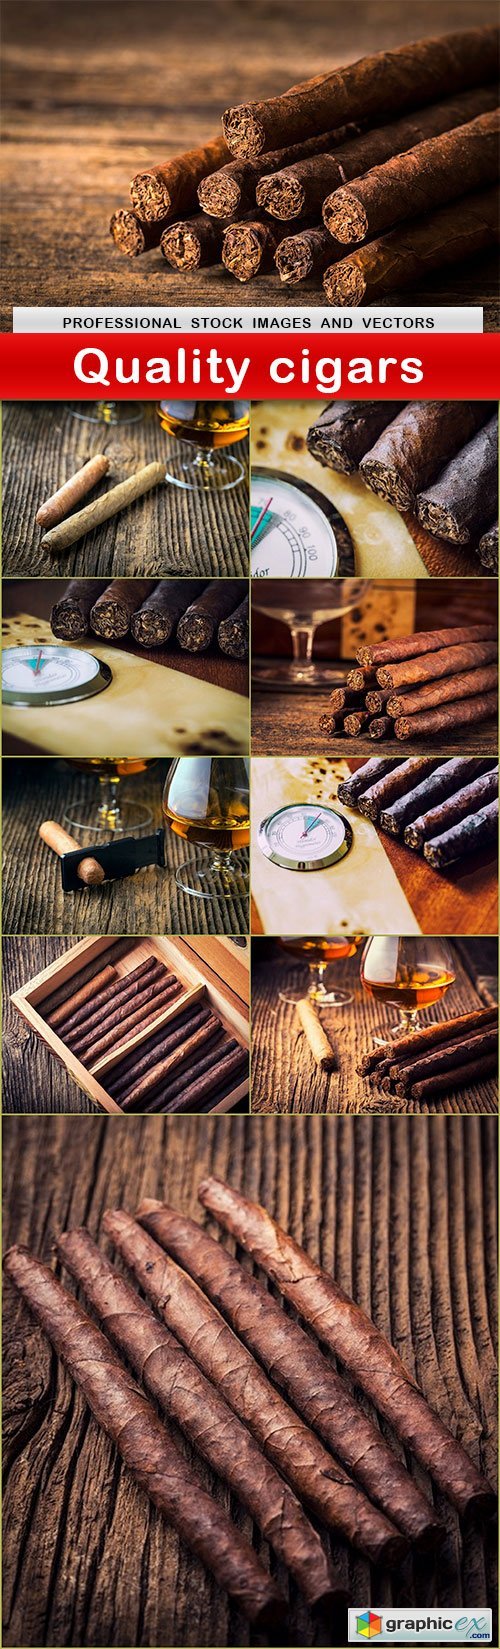 Quality cigars - 10 UHQ JPEG